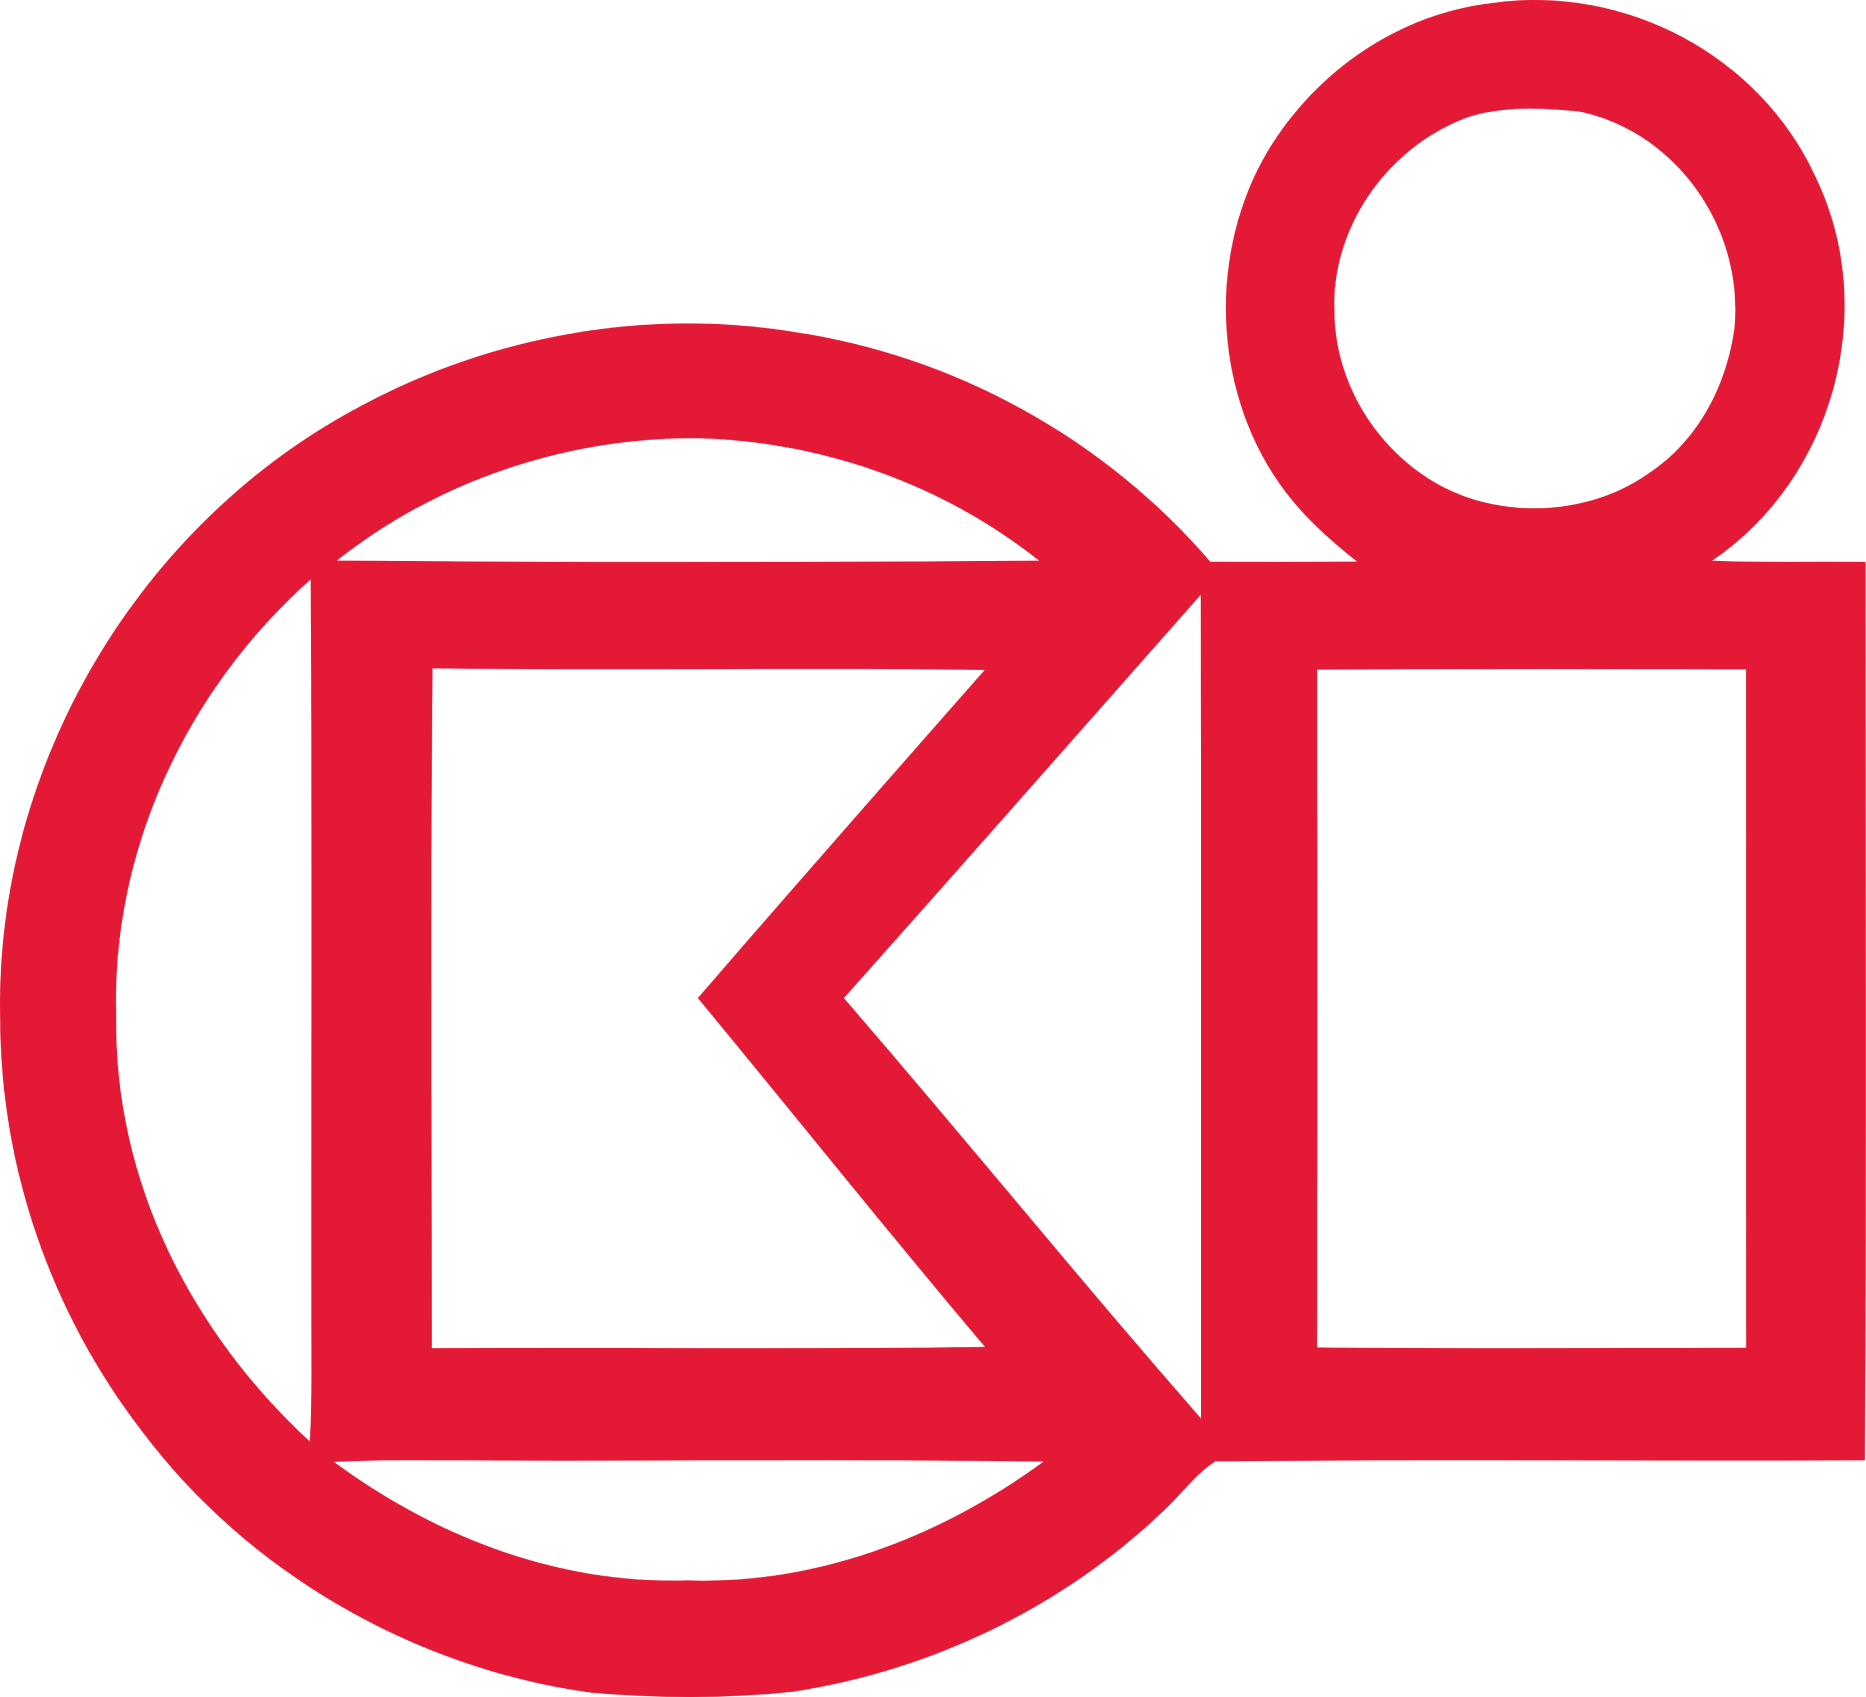 File:CISA Logo.png - Wikipedia